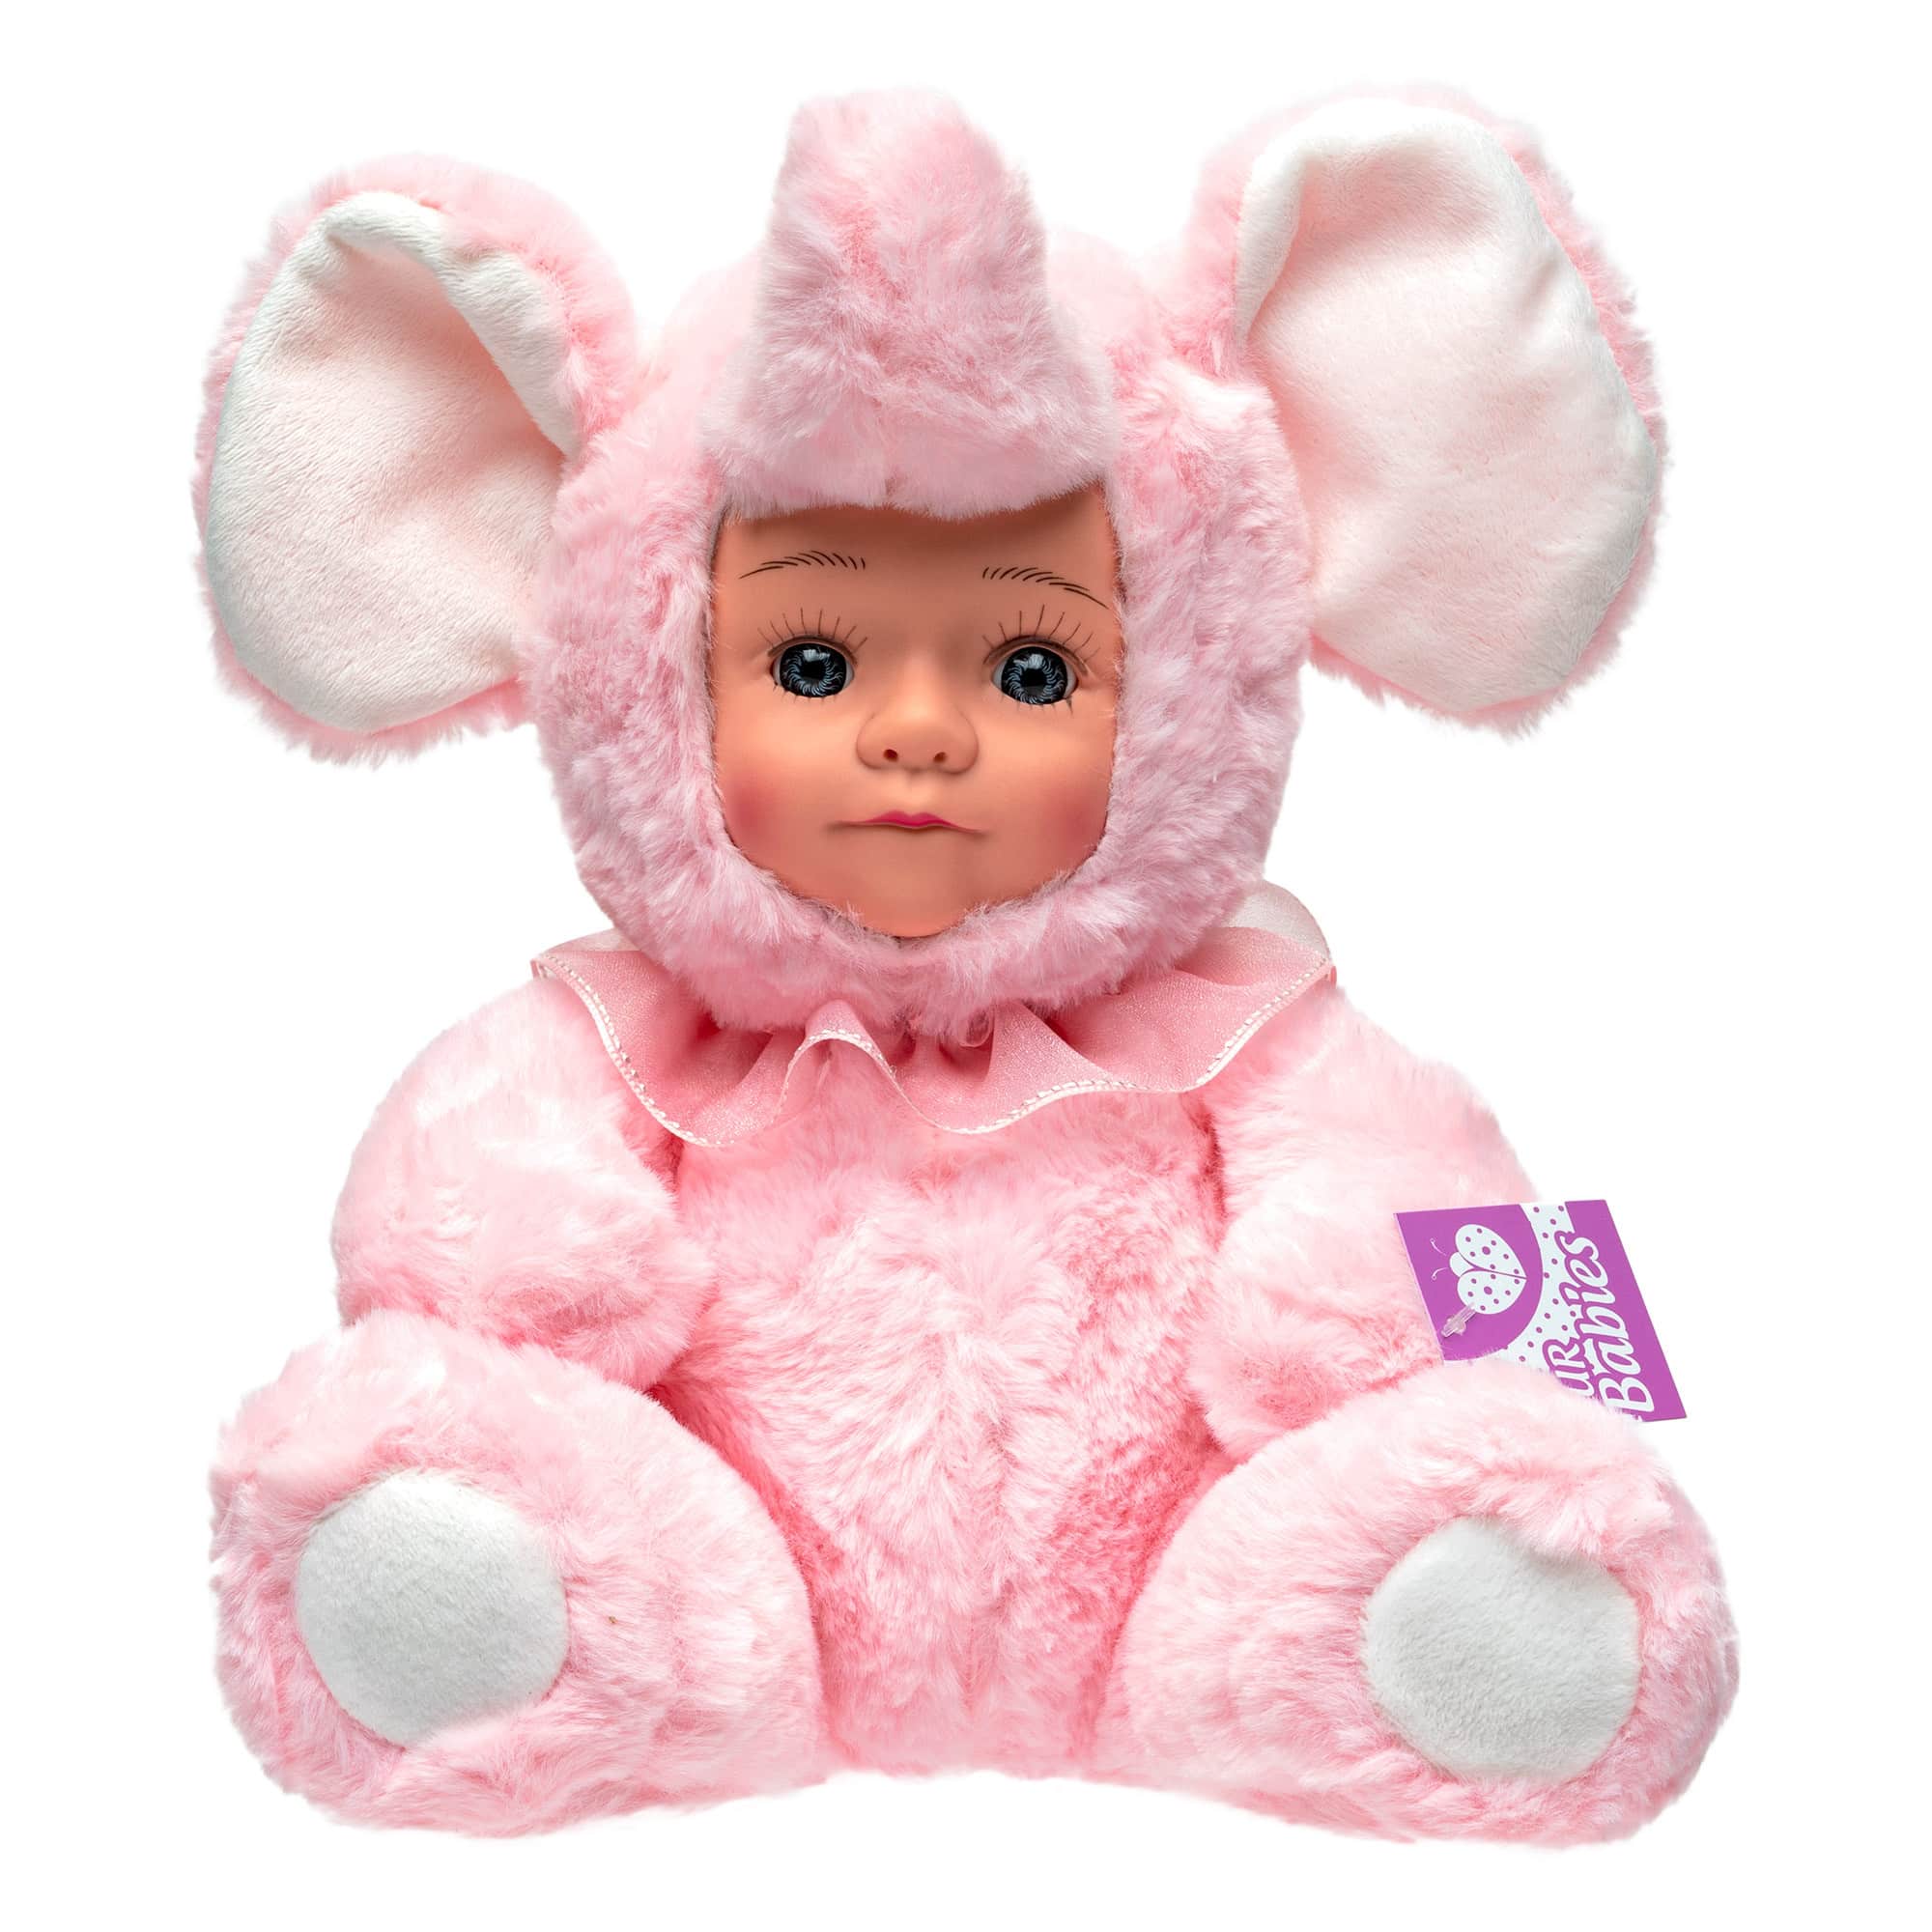 Fur Babies - 24cm Plush Doll - Ellie